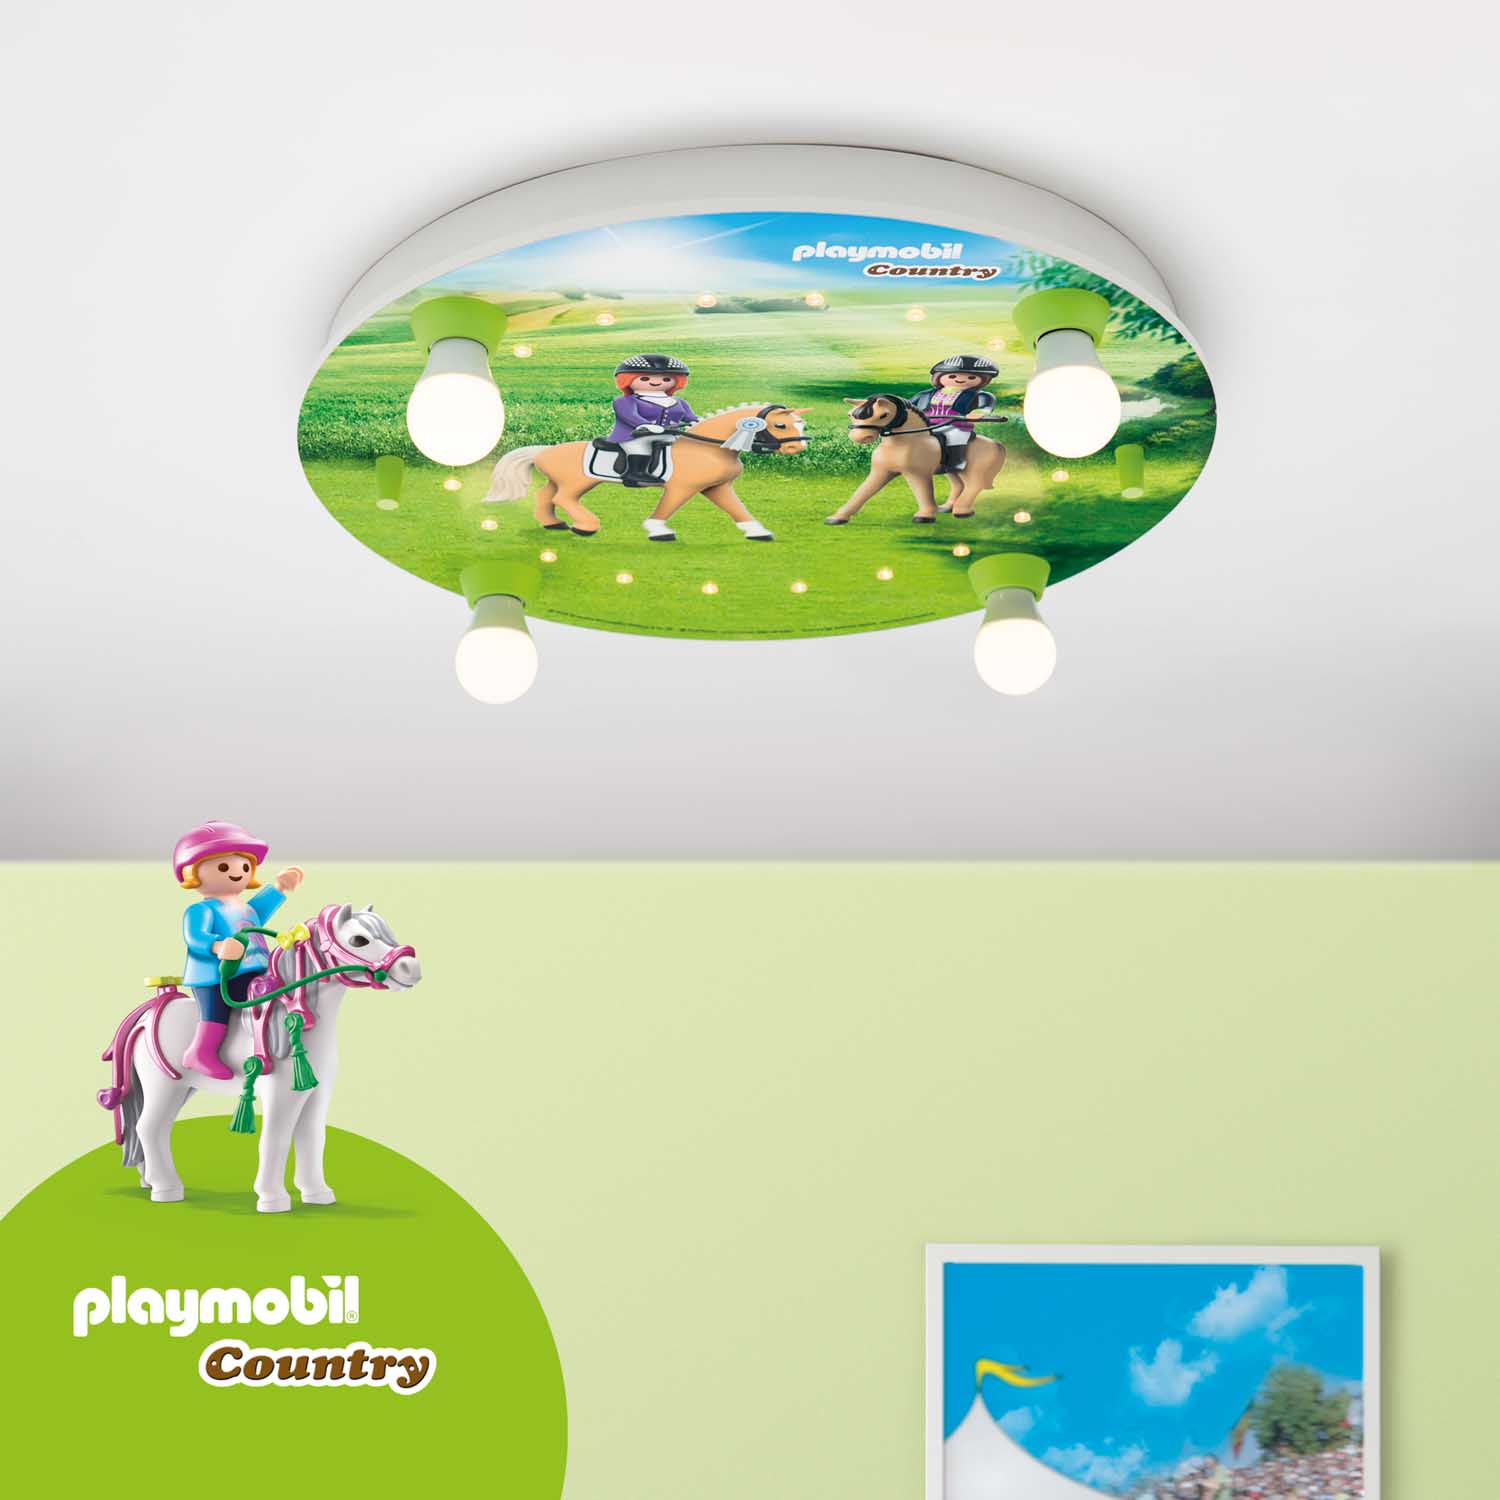 Elobra LED Deckenlampe Playmobil Country | Elobra Kinderleuchten |  kinderlampenland.de